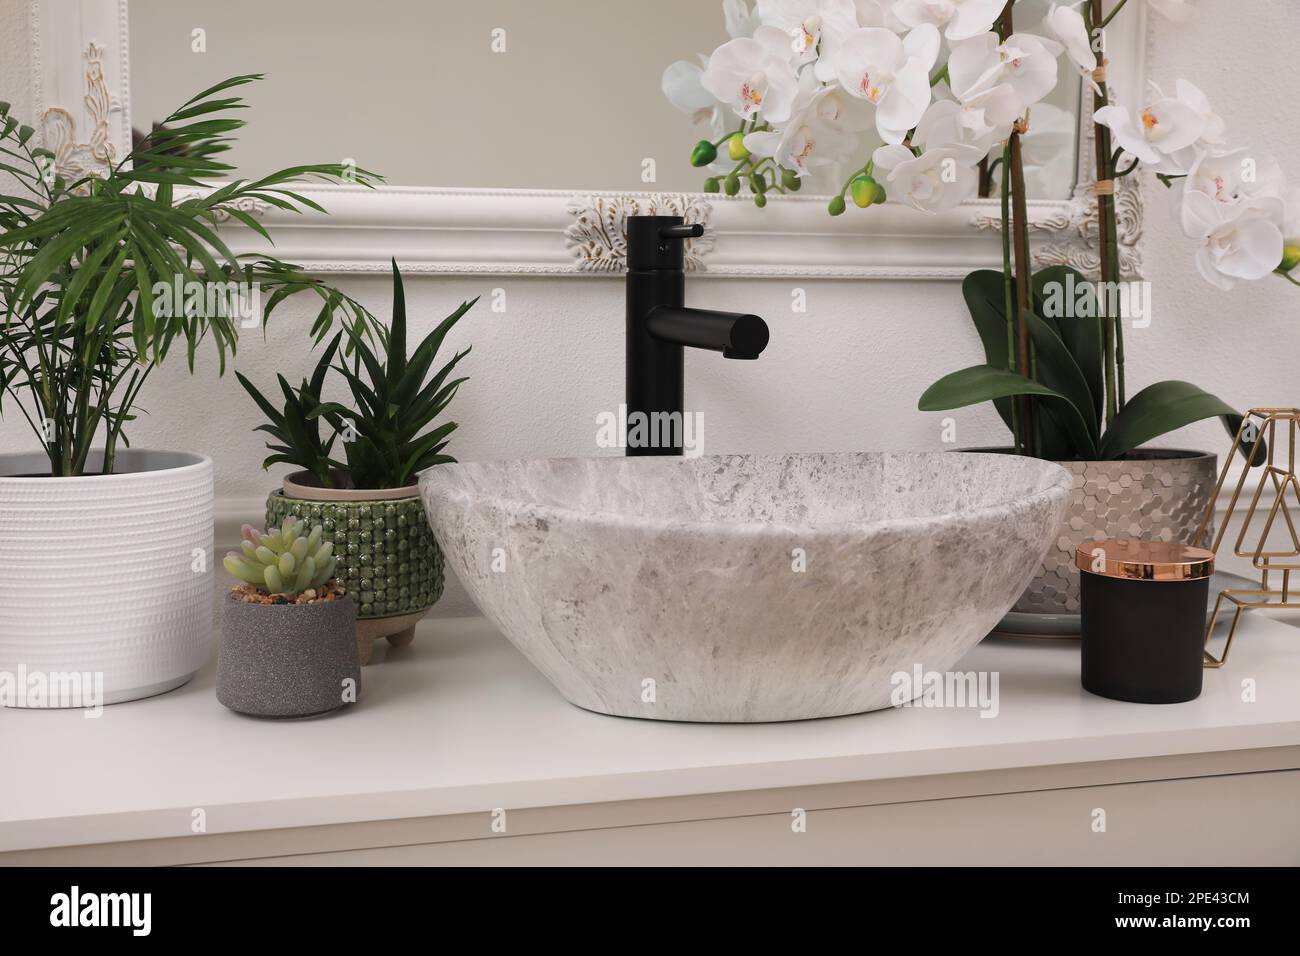 Stylish sink and beautiful houseplants in bathroom. Interior design Stock Photo